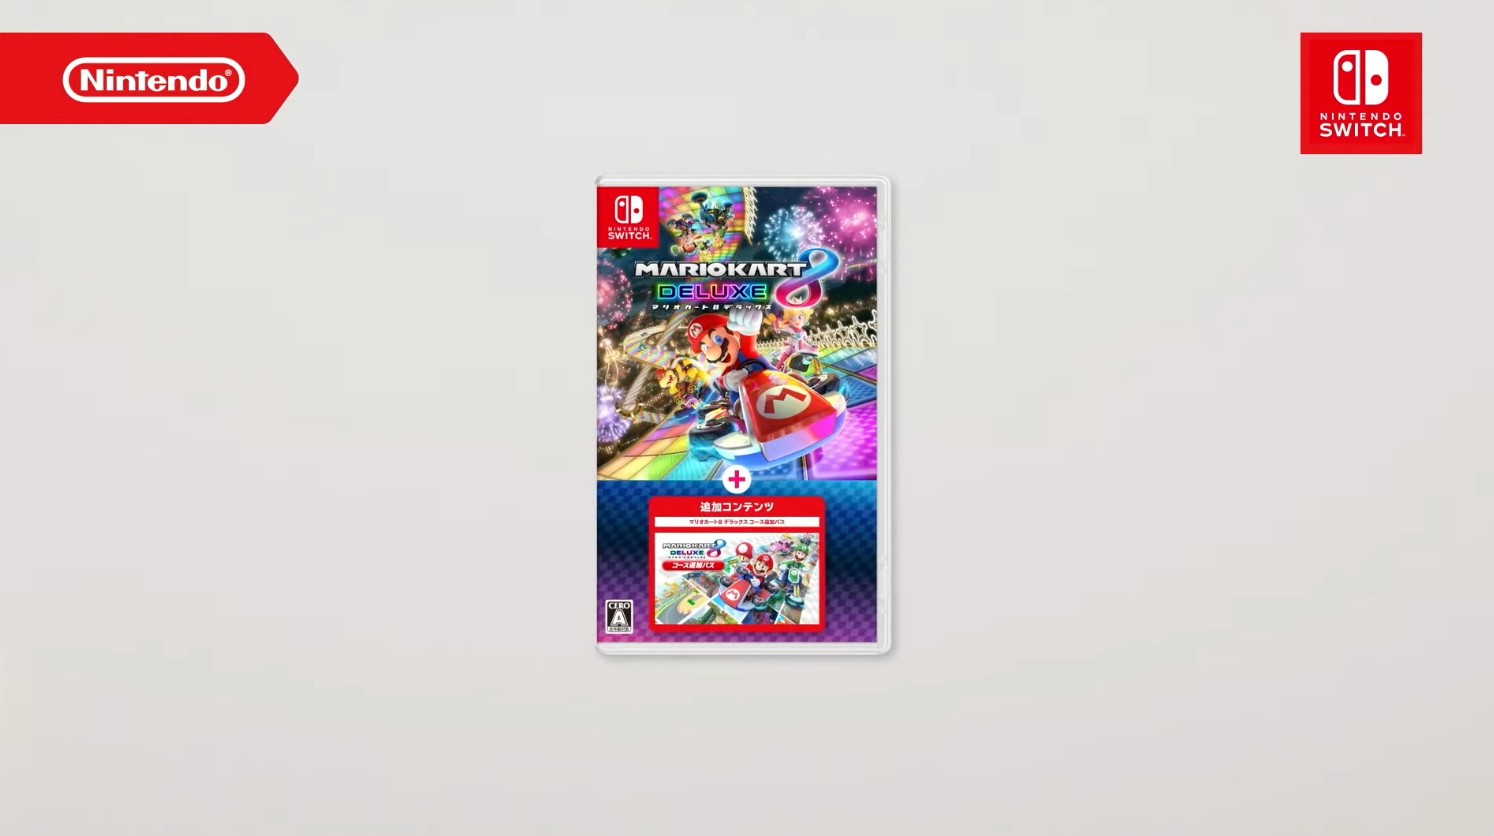 Mario Kart 8 Deluxe DLC news, Wave 6 release date, new tracks